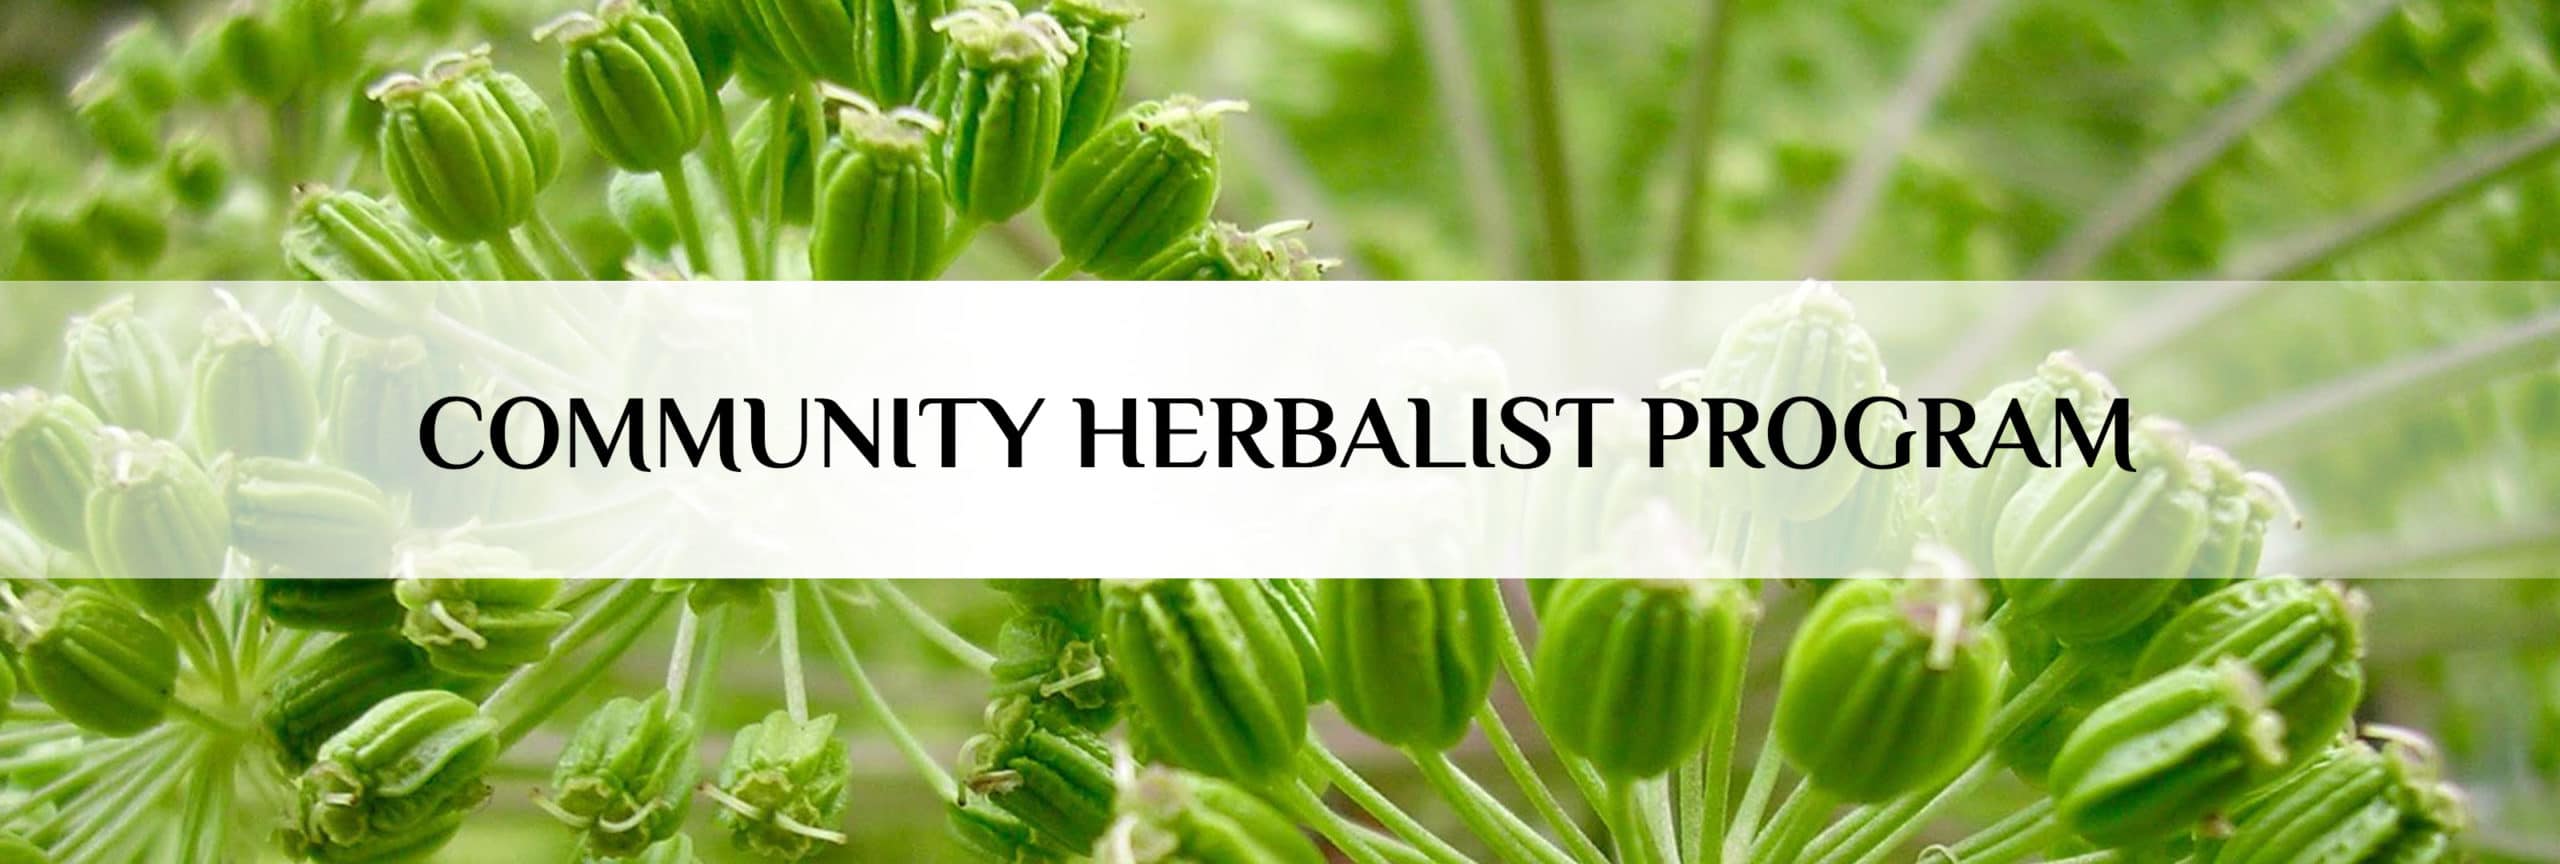 Community Herbalist Program